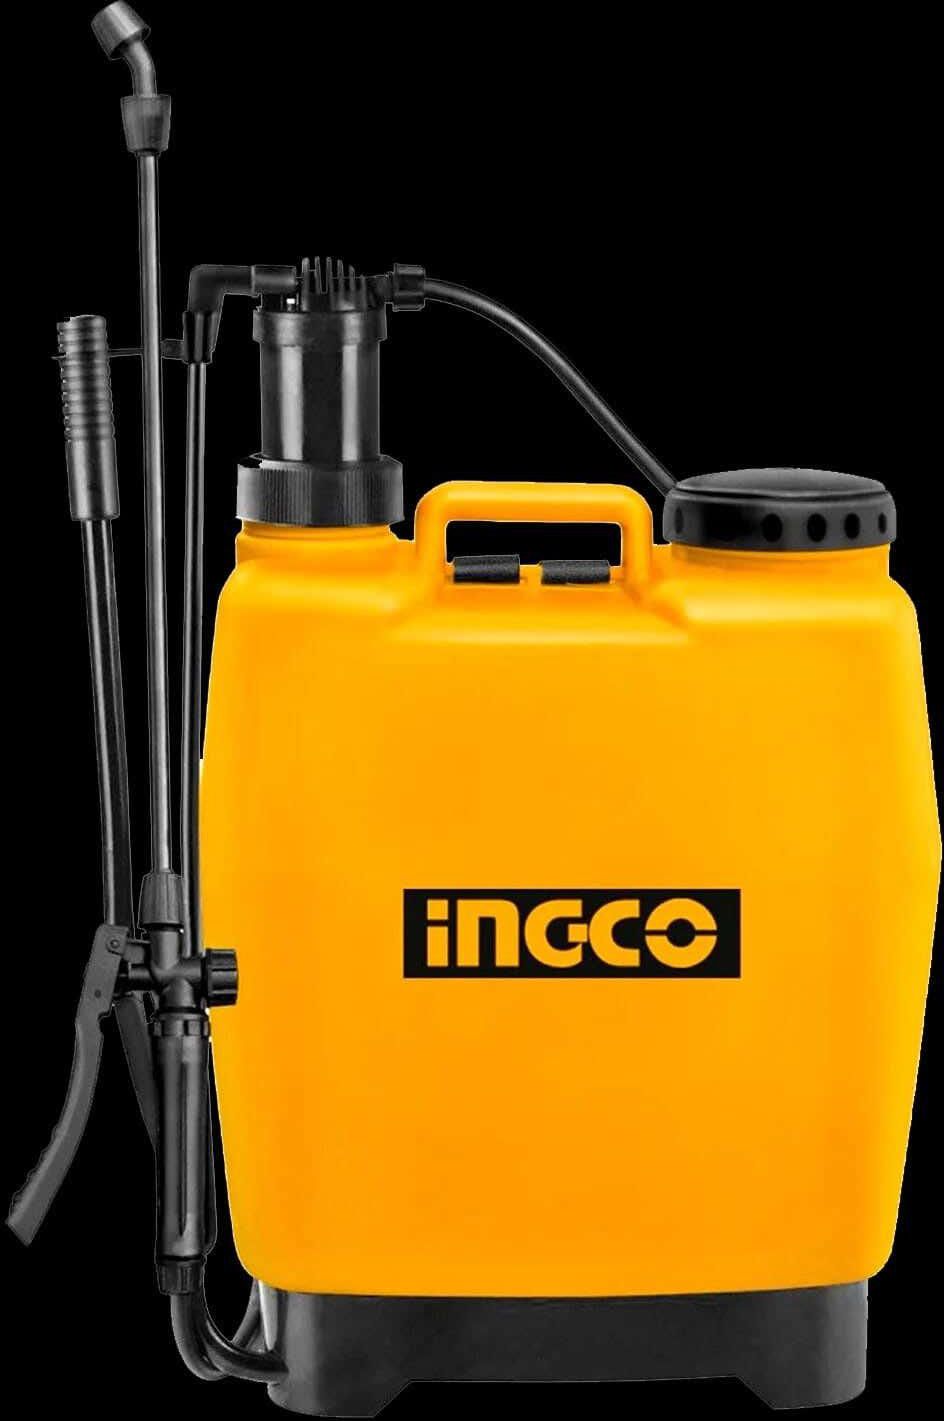 Get Ingco HSPP42002 Knapsack Garden Disinfectant Sprayer, 20L - Yellow with best offers | Raneen.com